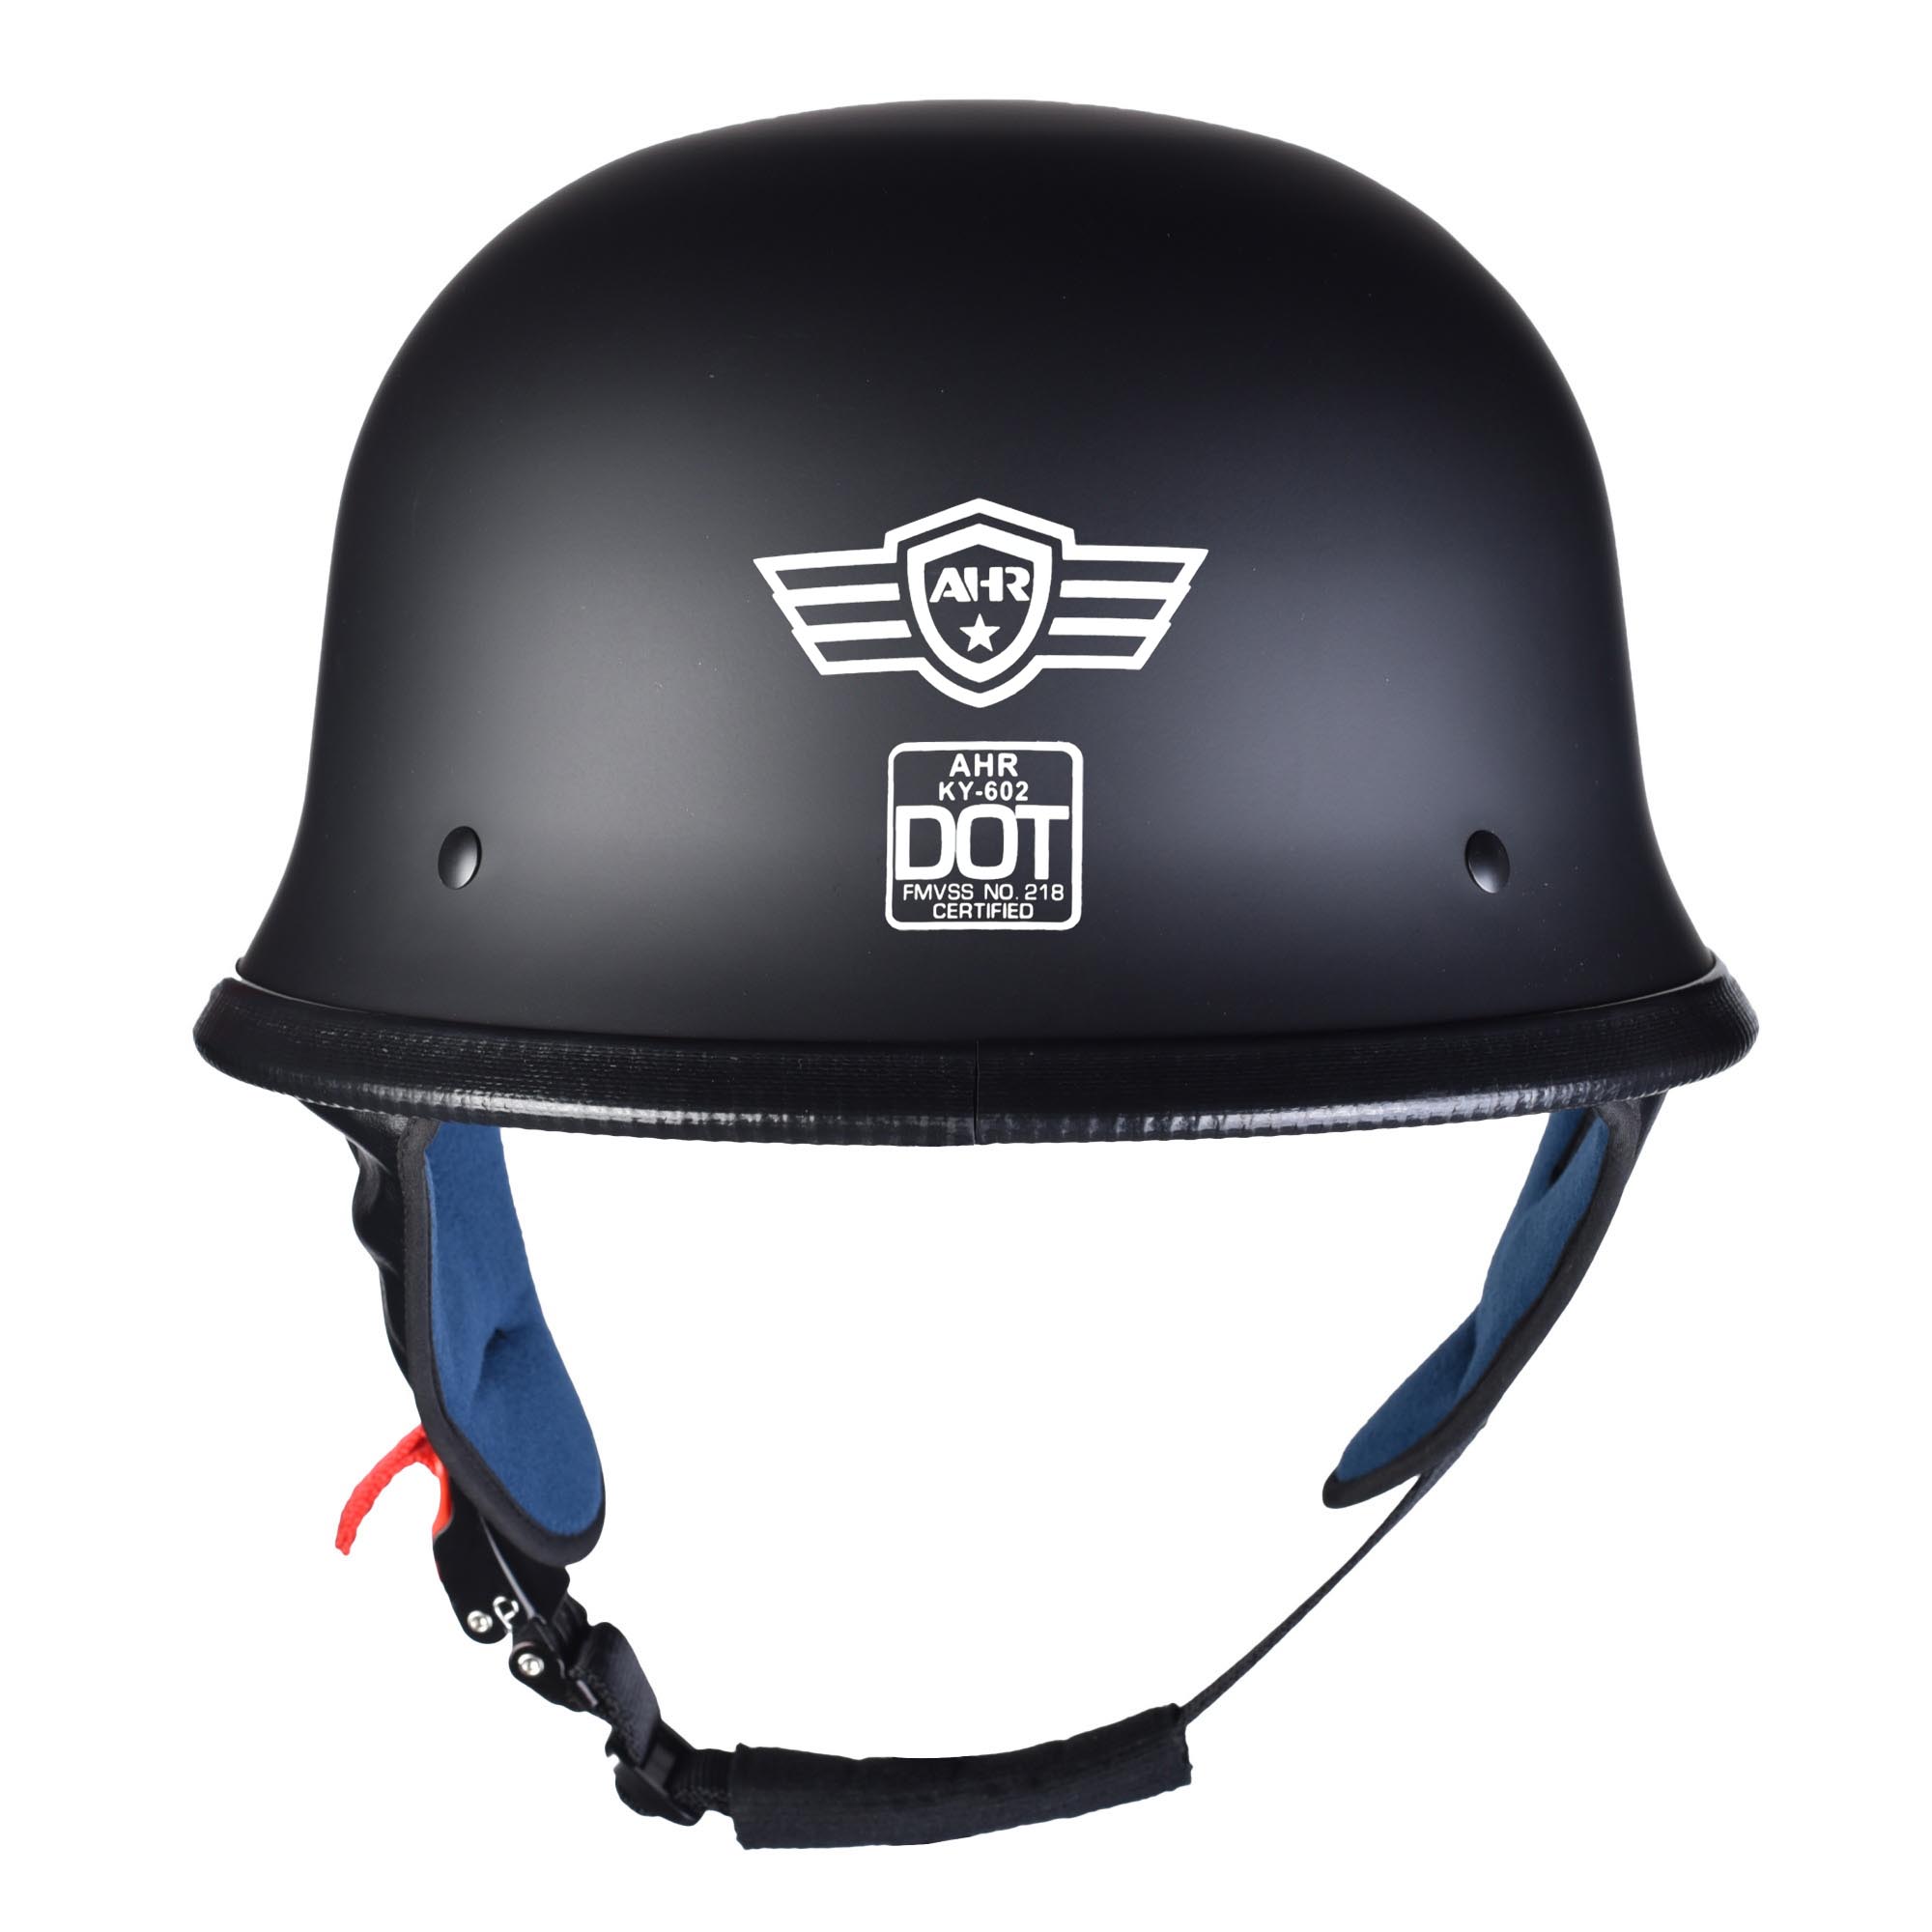 AHR RUN-G DOT German Style Motorcycle Half Helmet Open Face Cruiser Chopper Biker Skull Cap Helmet L